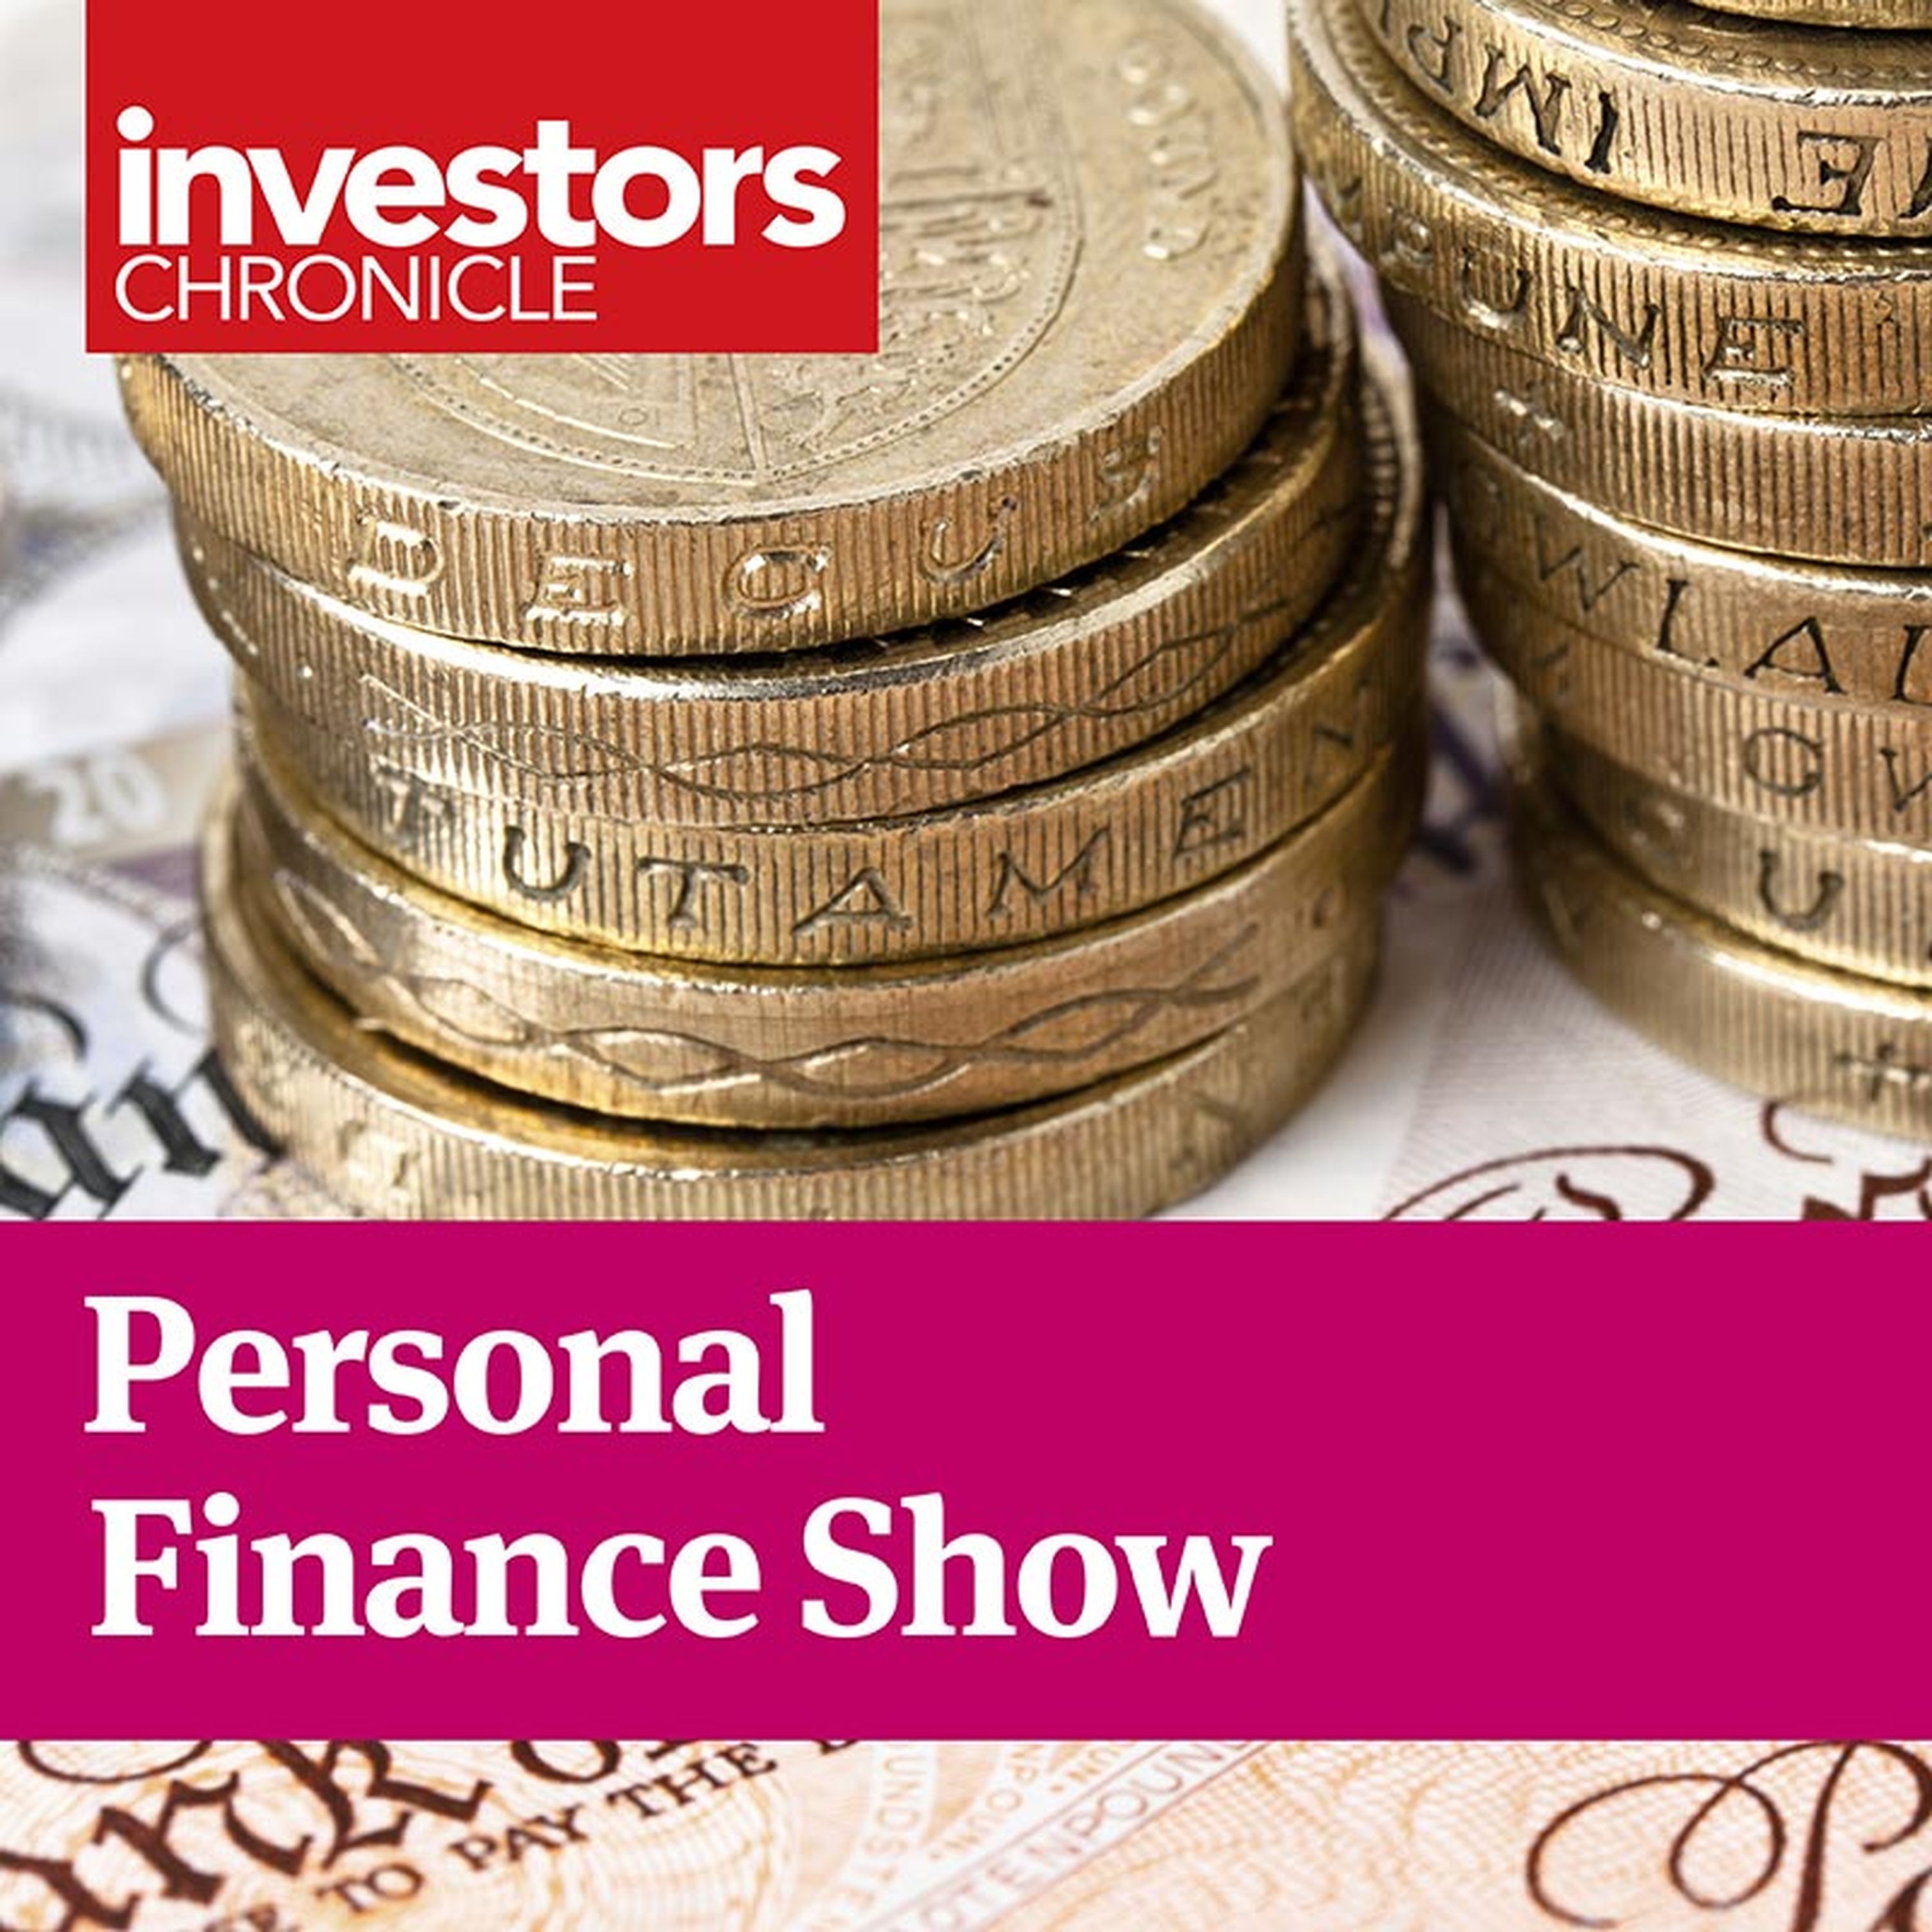 Personal Finance Show 19 February 2016